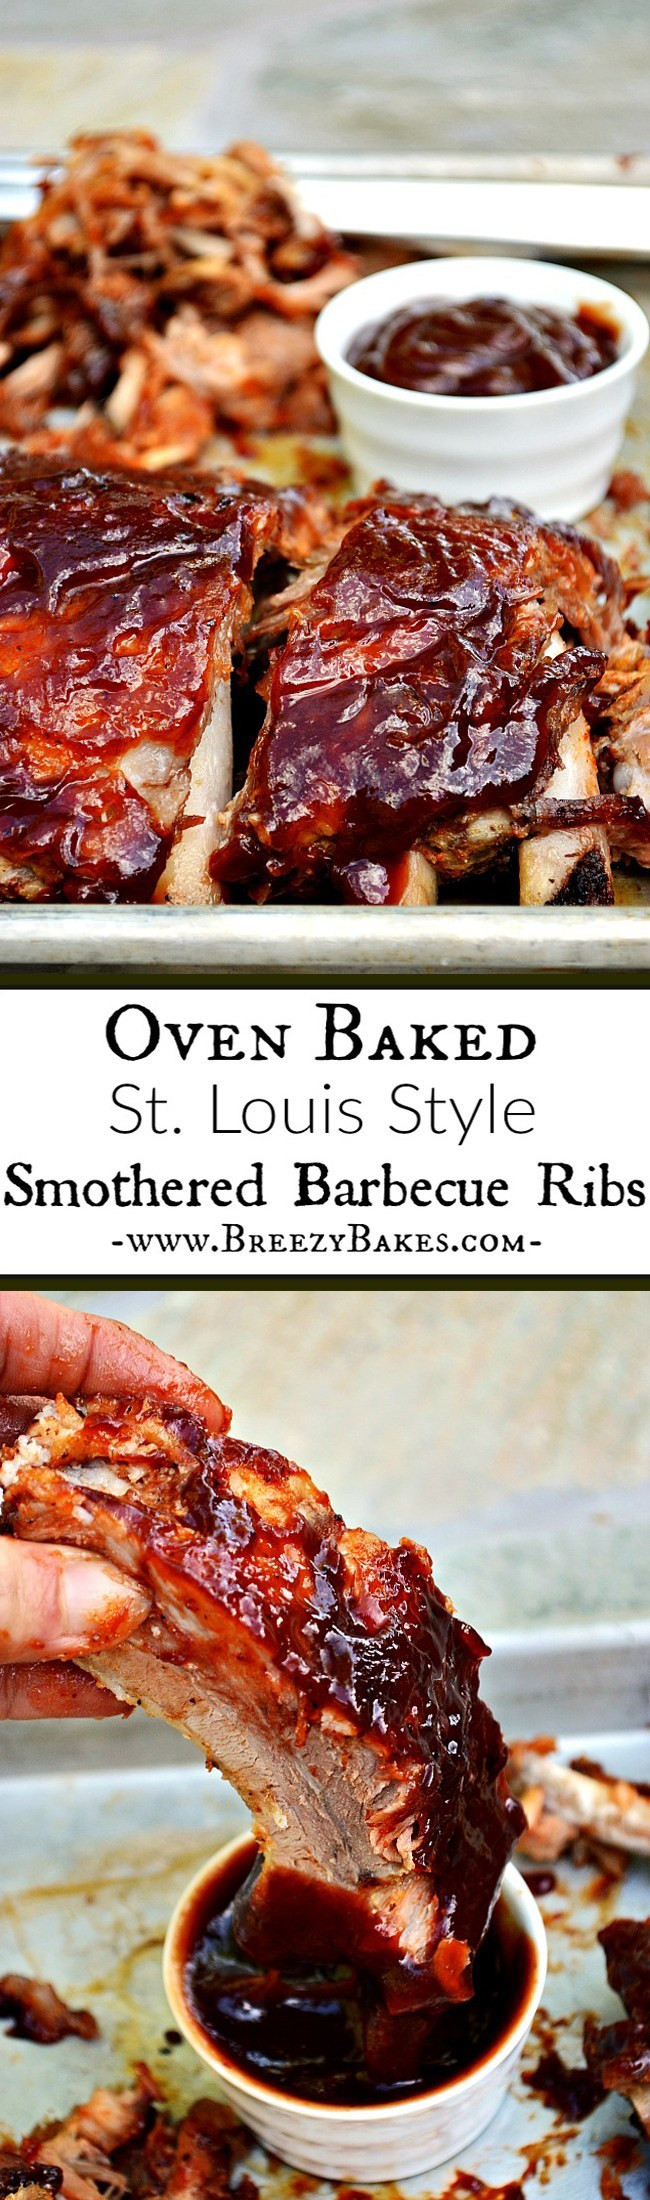 Pork Spare Ribs Oven
 Oven Baked Barbecue Pork Ribs Breezy Bakes